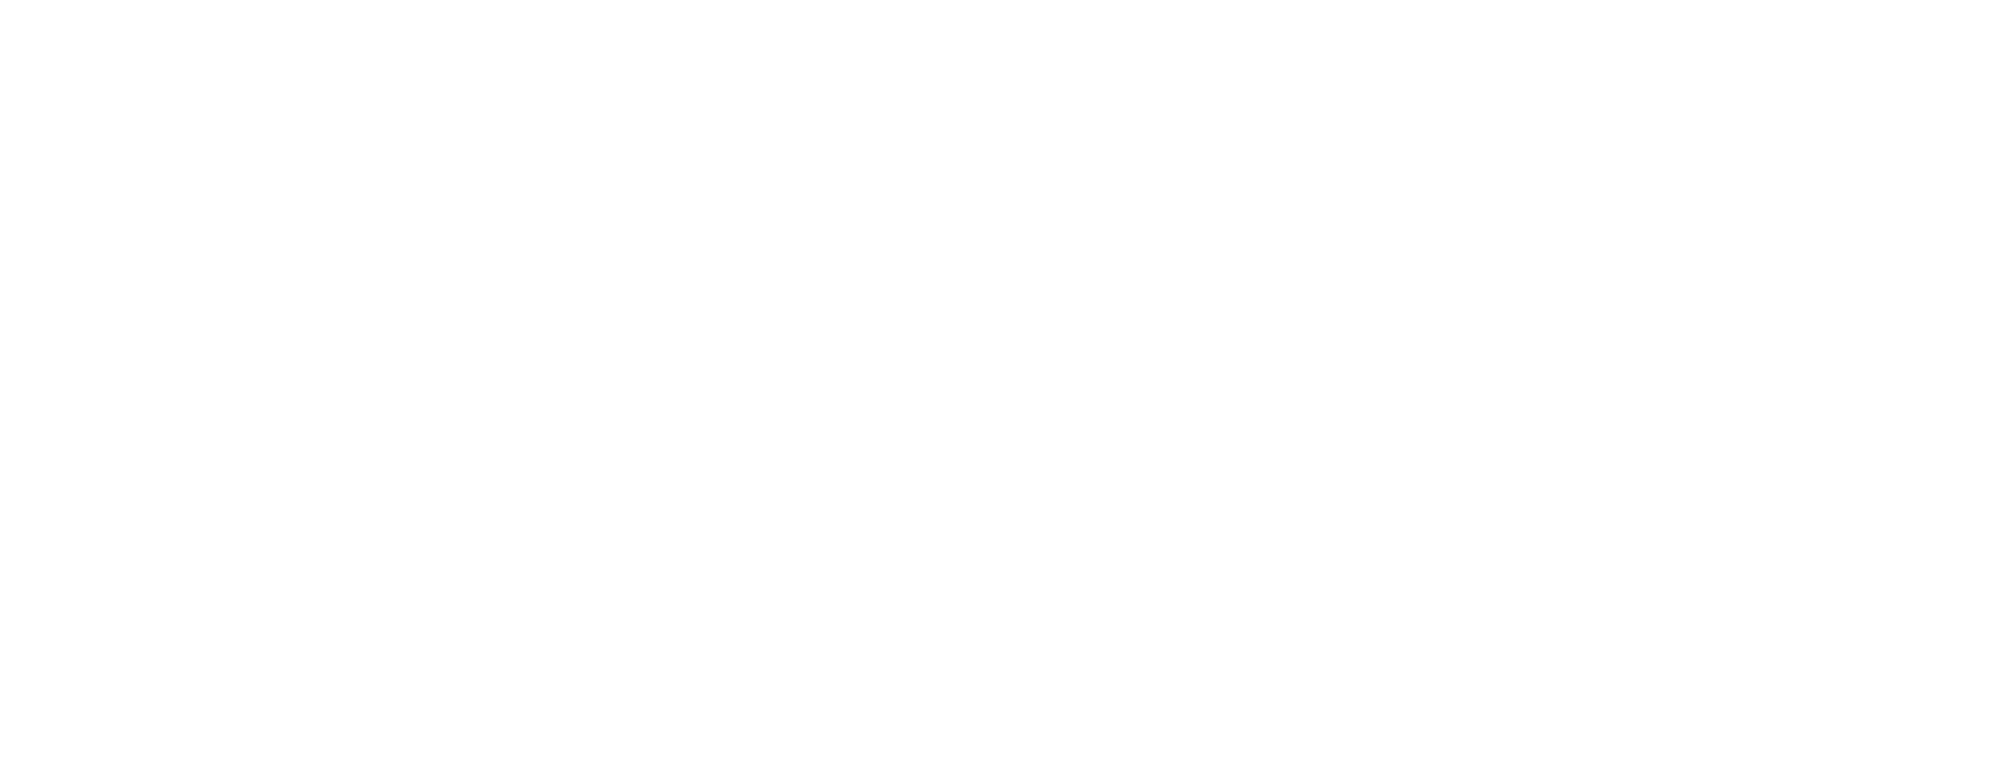 OpenFF Toolkit 0.10.1+0.g88b03bf9.dirty documentation logo